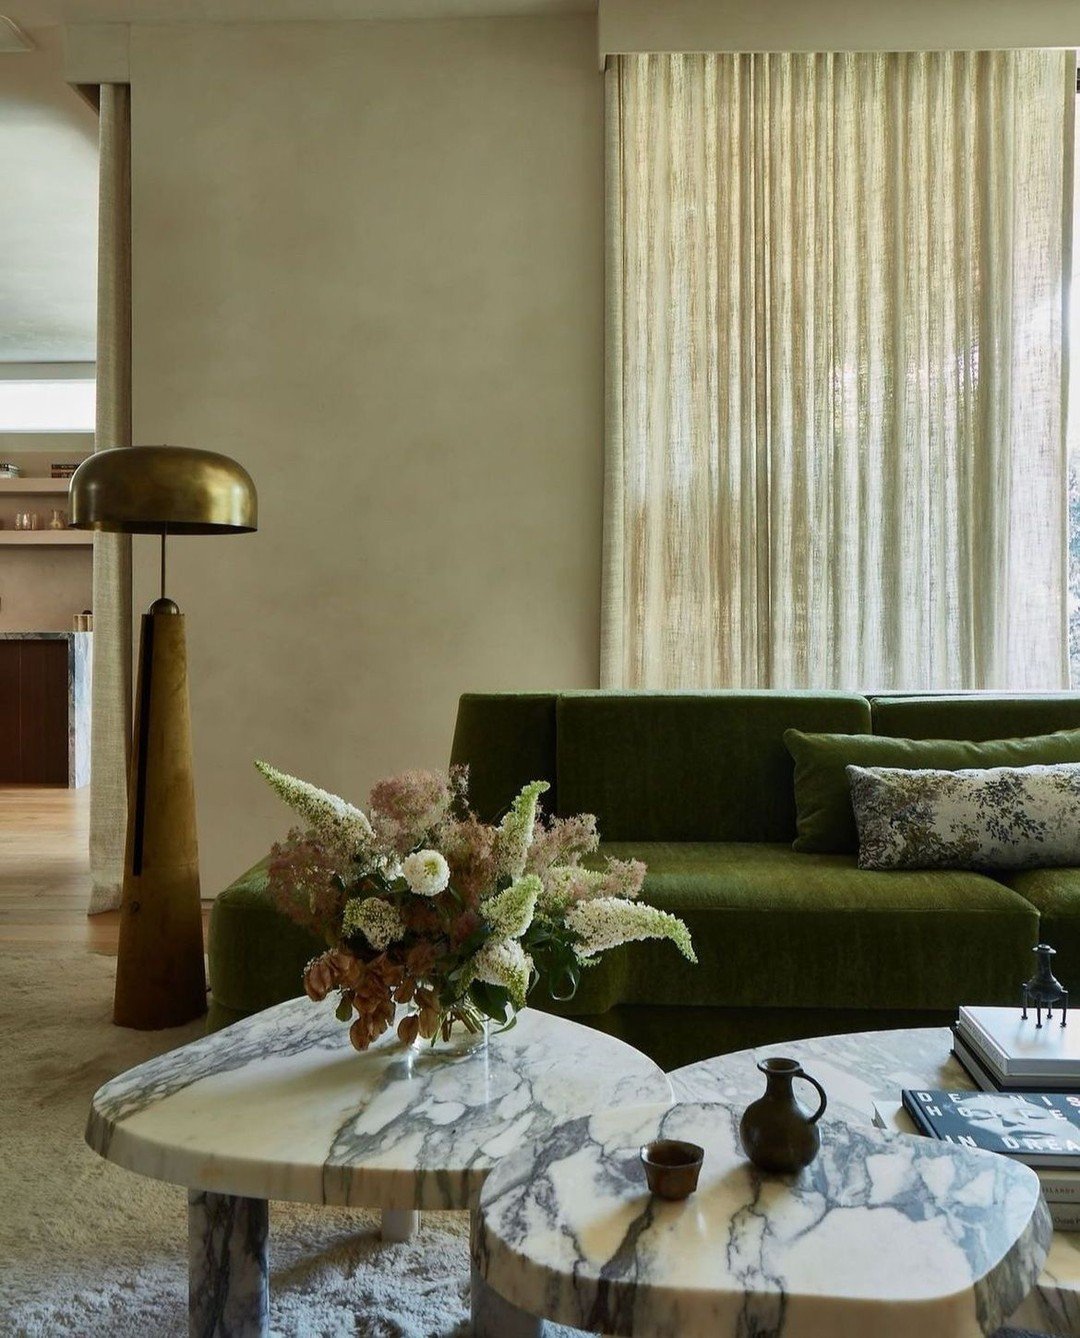 Green sofa dreams. (Design by @jakearnold) #thecravecollective #interiordesign #design #interiors123 #luxury